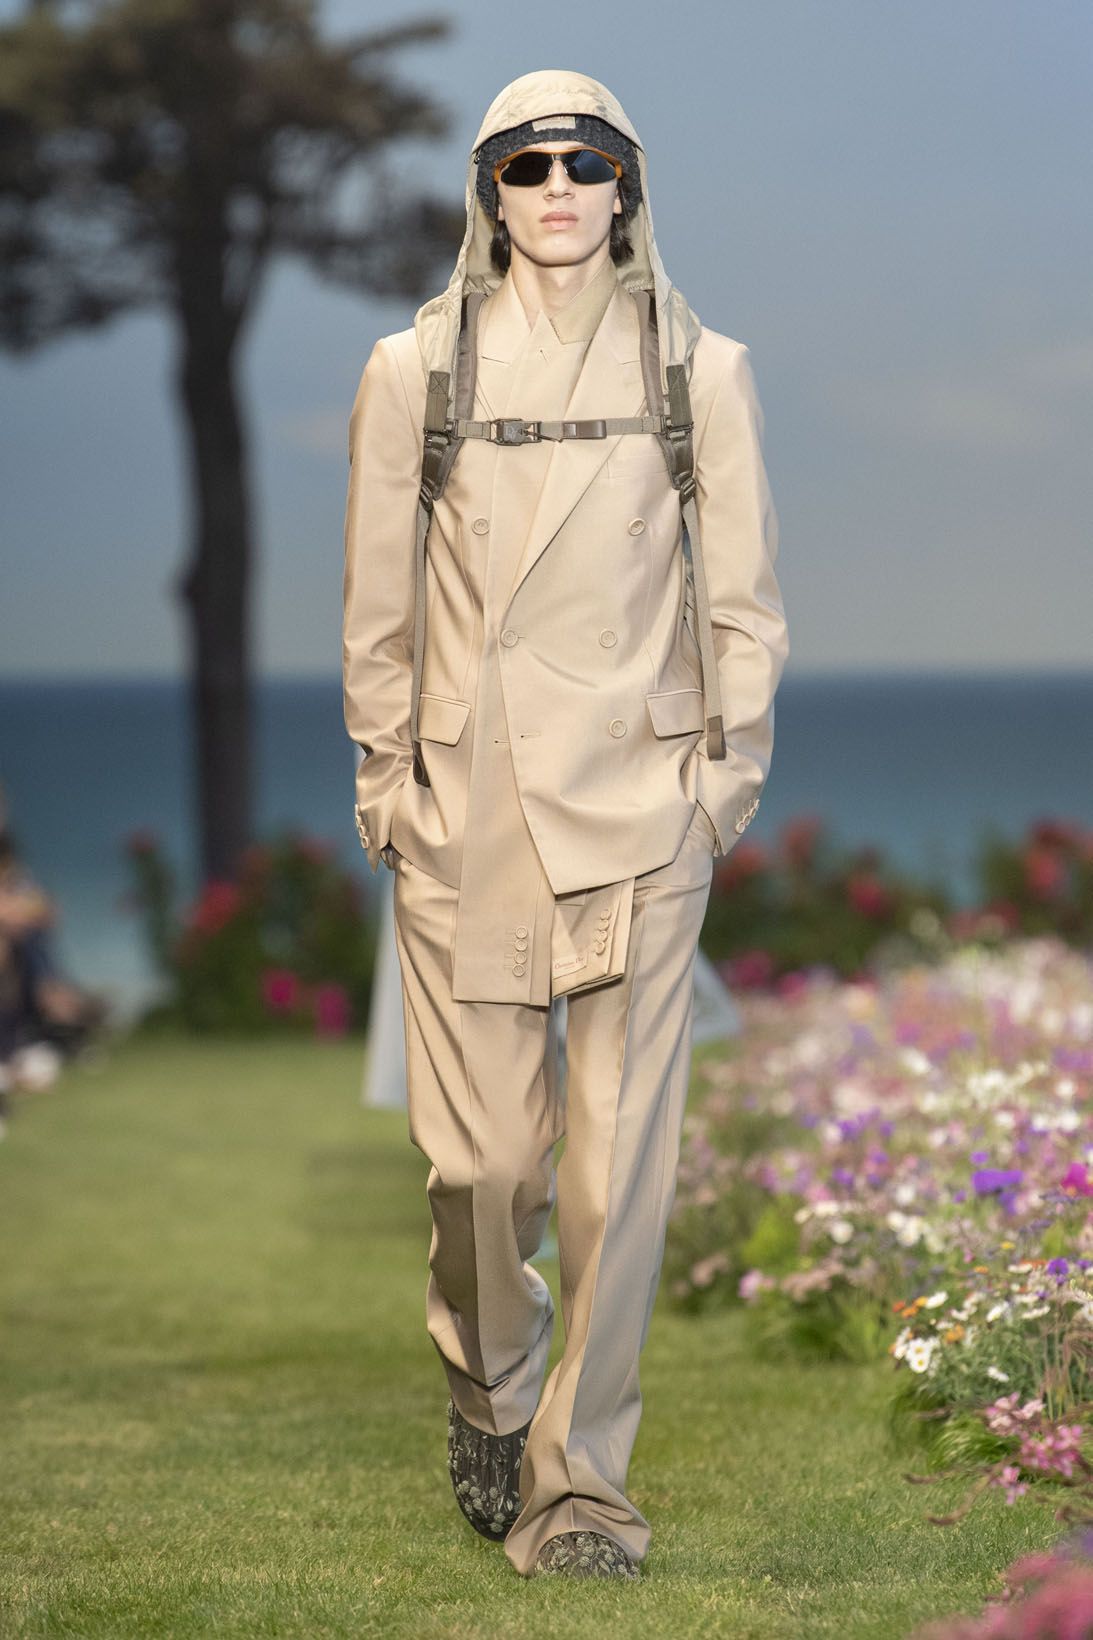 Konsep Taman Bunga di Fashion Show Dior Men's Spring/Summer 2023